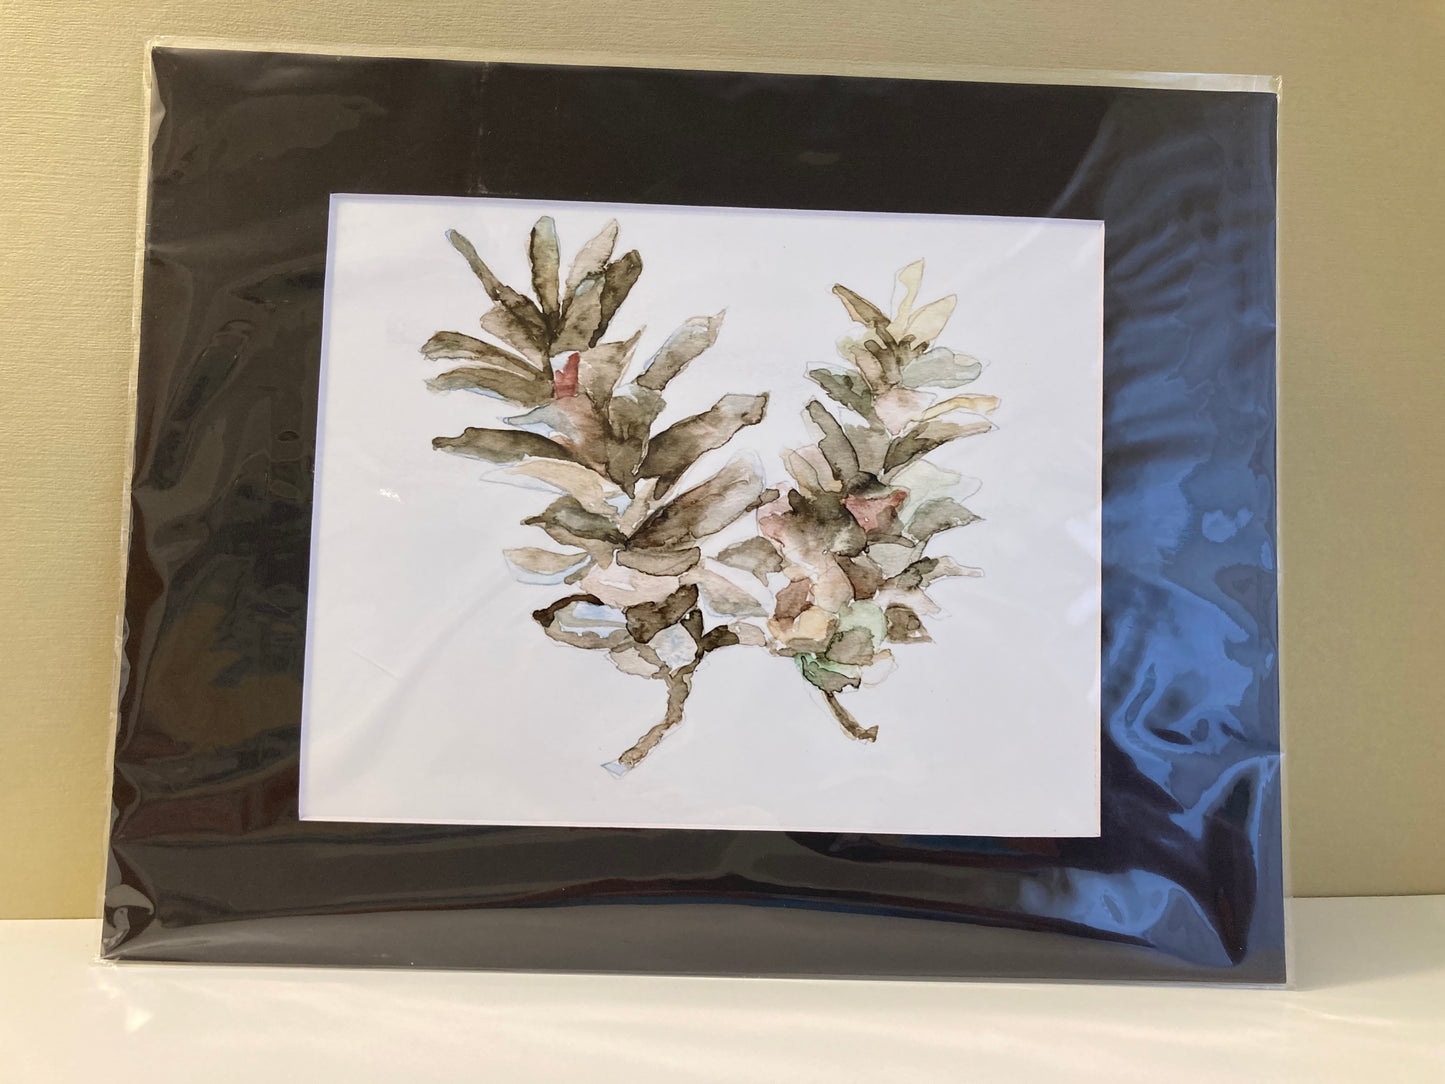 Pine Cone Watercolor Print Art - Flamingo Shores - Original Art for Home Decor and Gifts